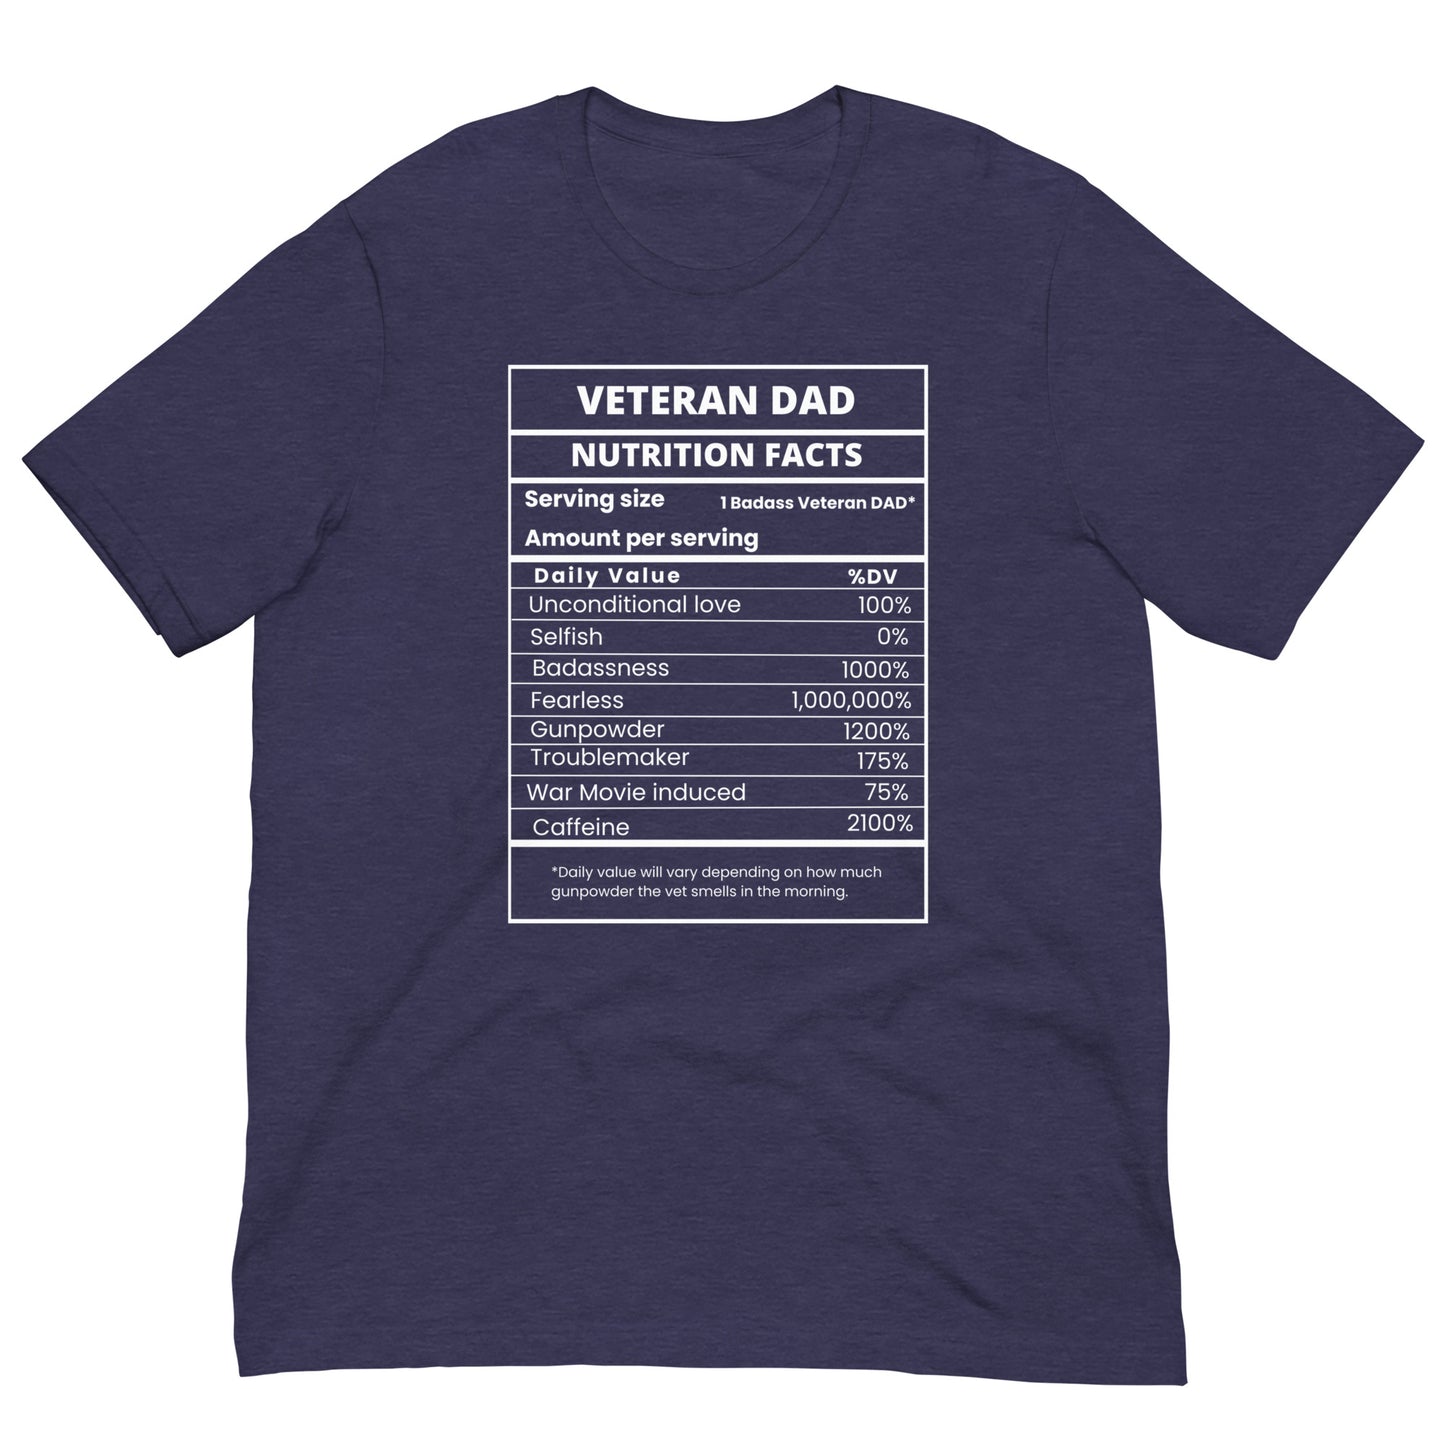 Veteran dad t-shirt